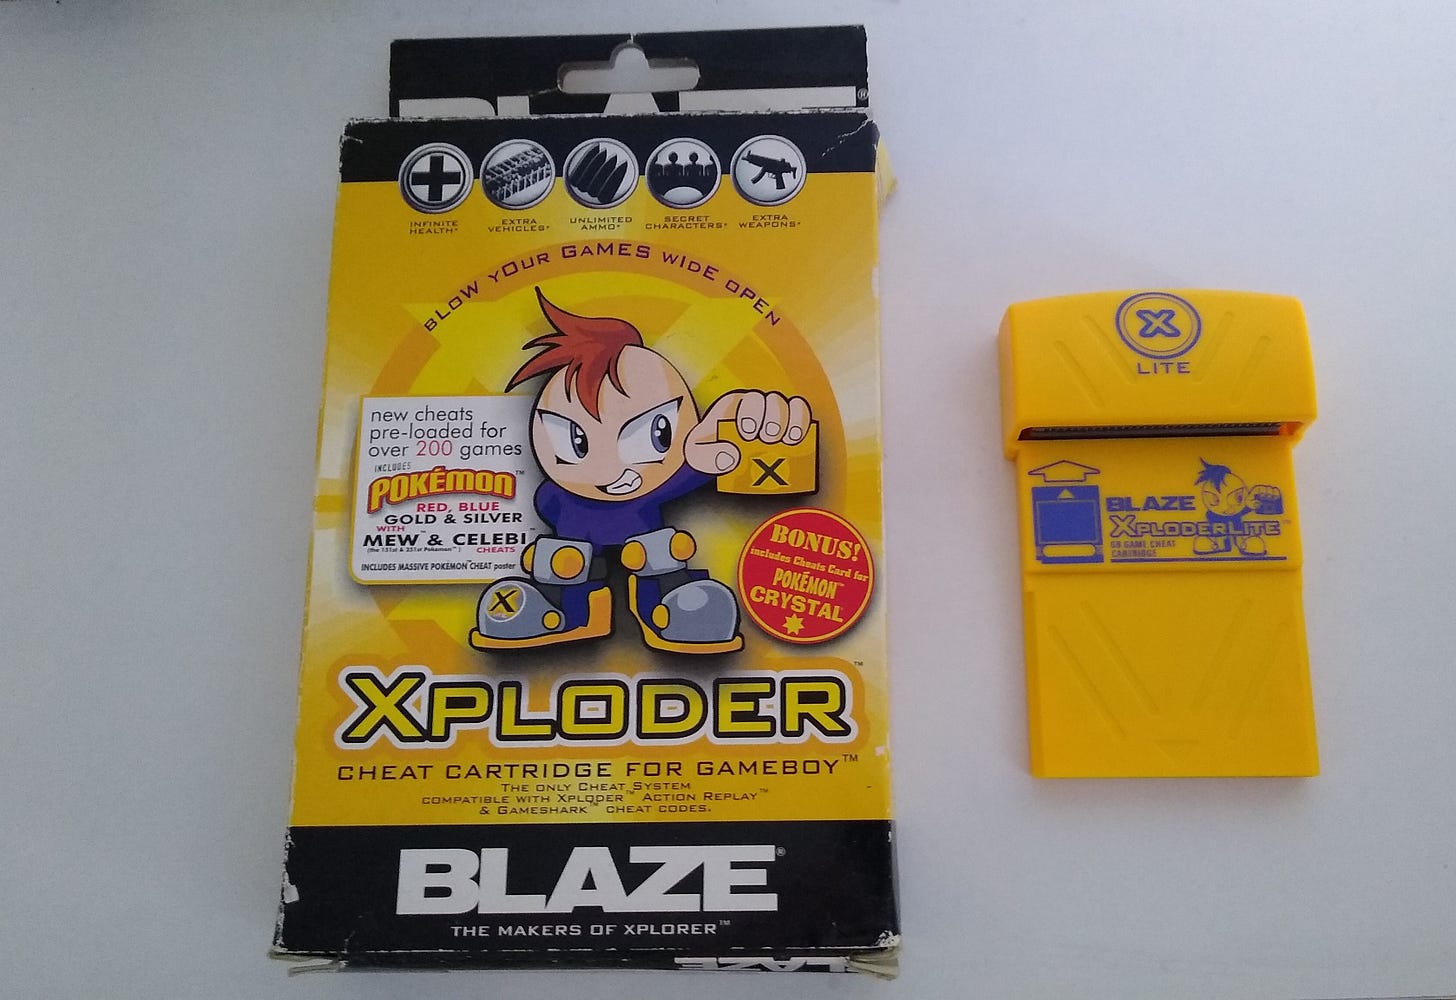 My copy of Xploder Cheat Cartridge for Game Boy by Blaze